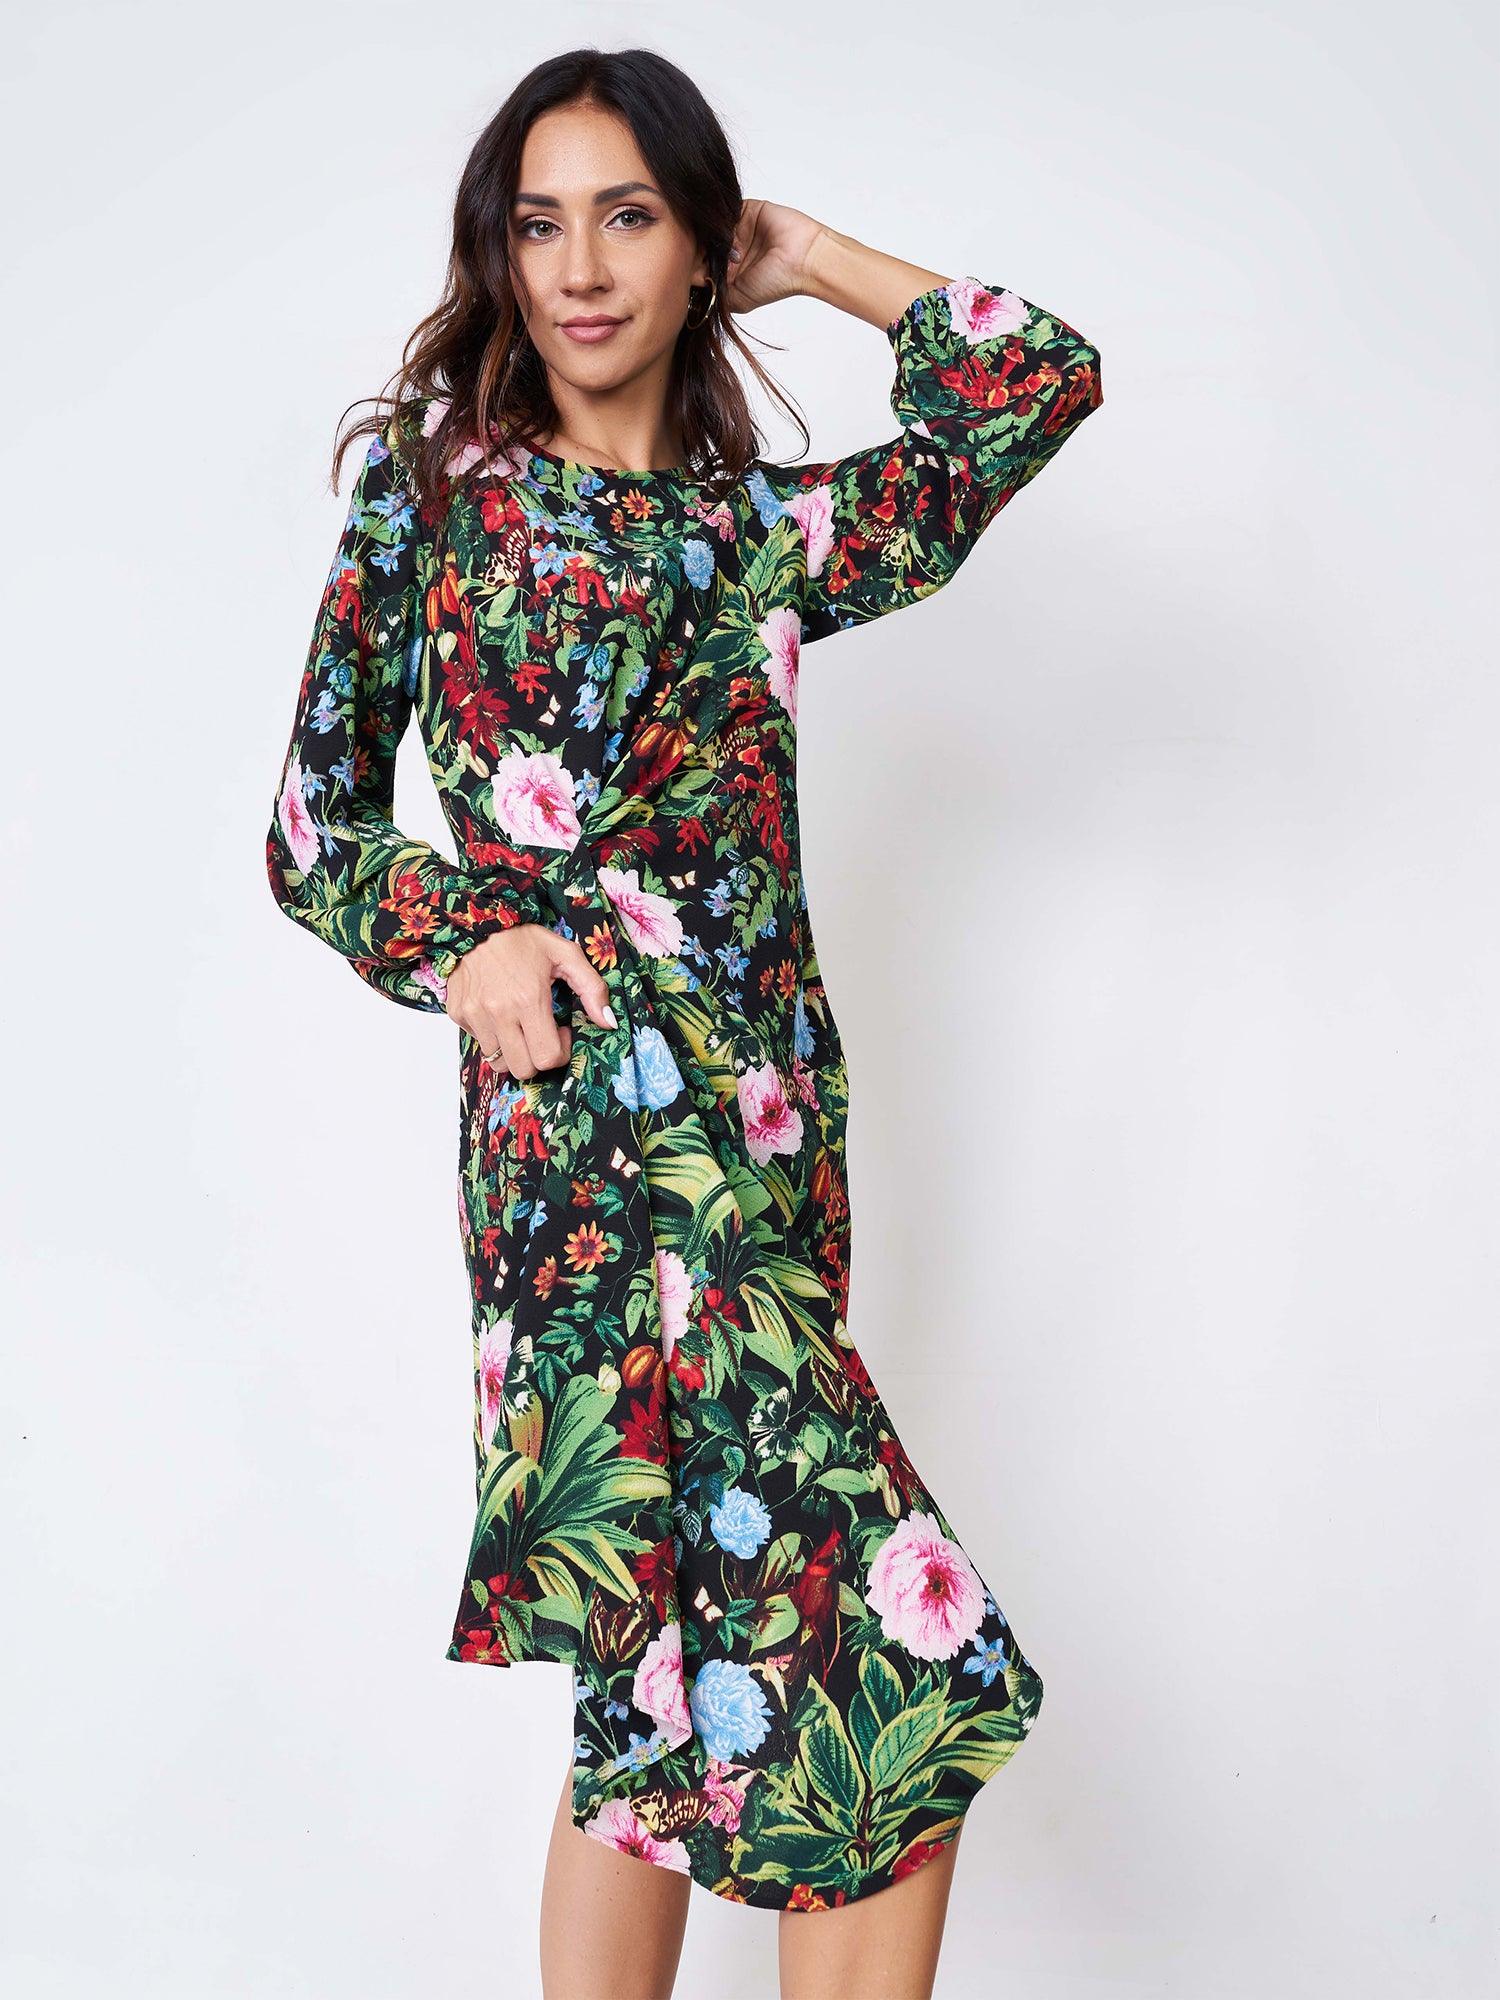 Tropical floral print dress - Avirate Sri Lanka